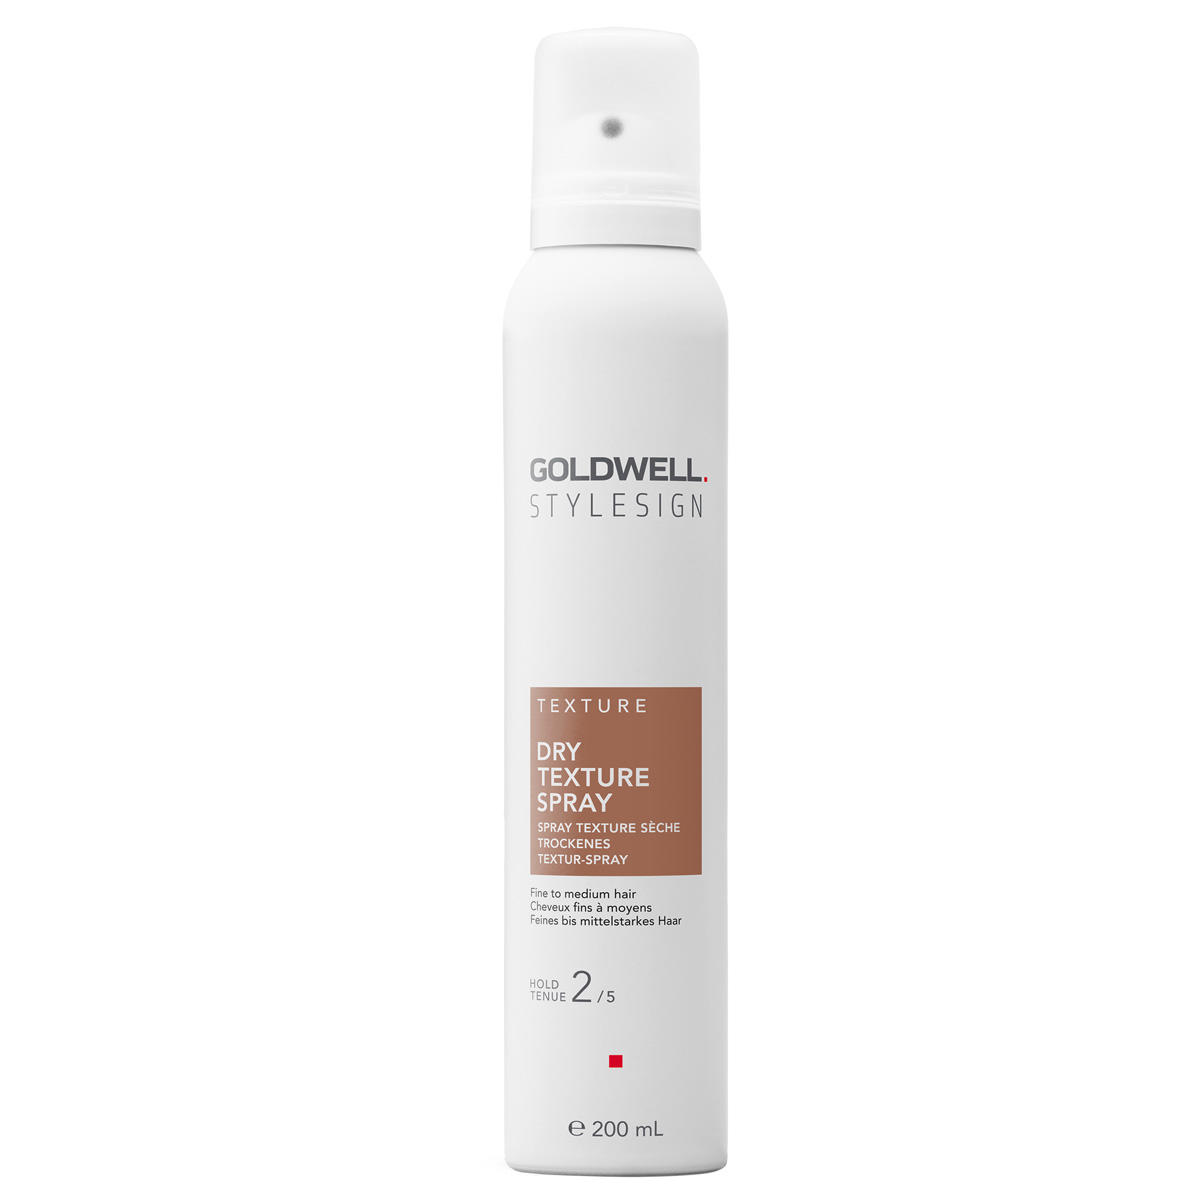 Goldwell StyleSign Texture Spray per texture a secco 200 ml - 1